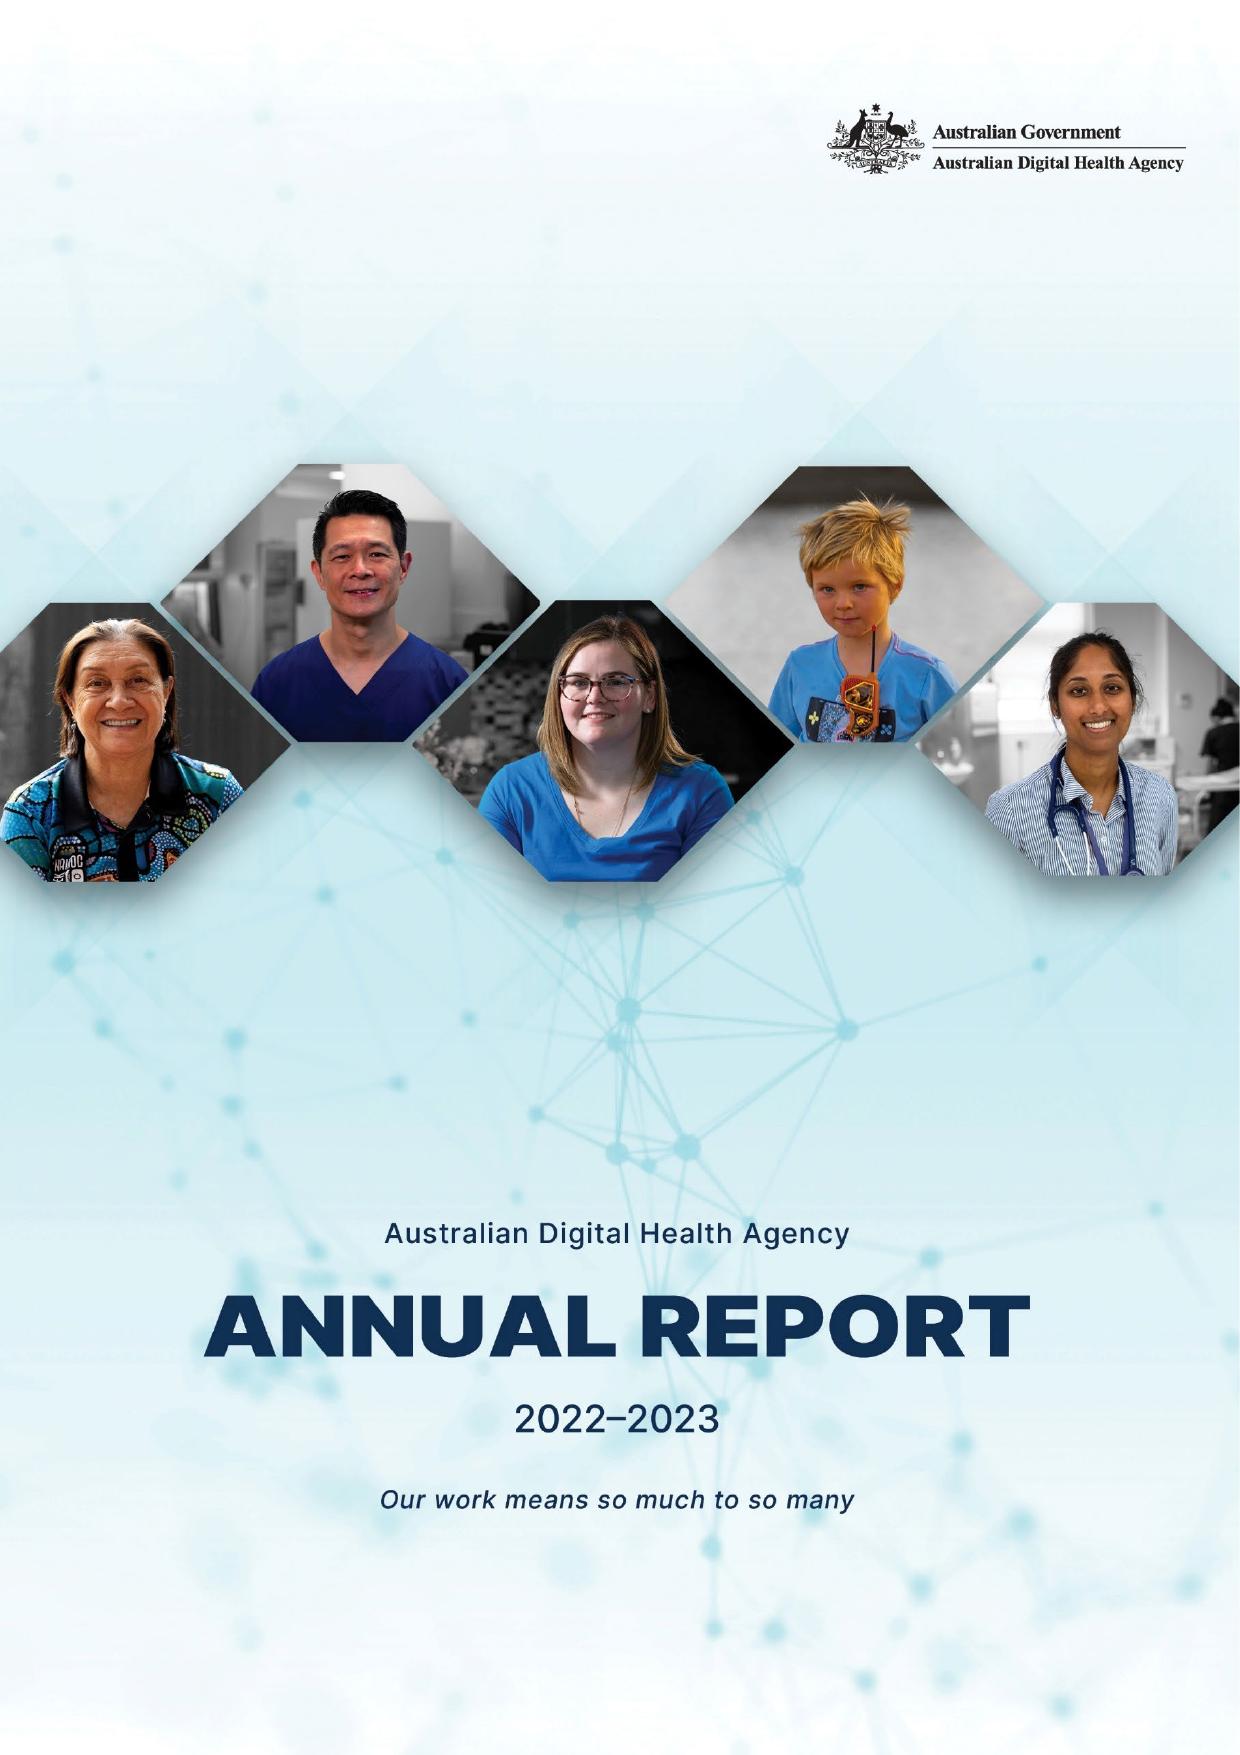 DIGITALHEALTH.GOV 2022 Annual Report